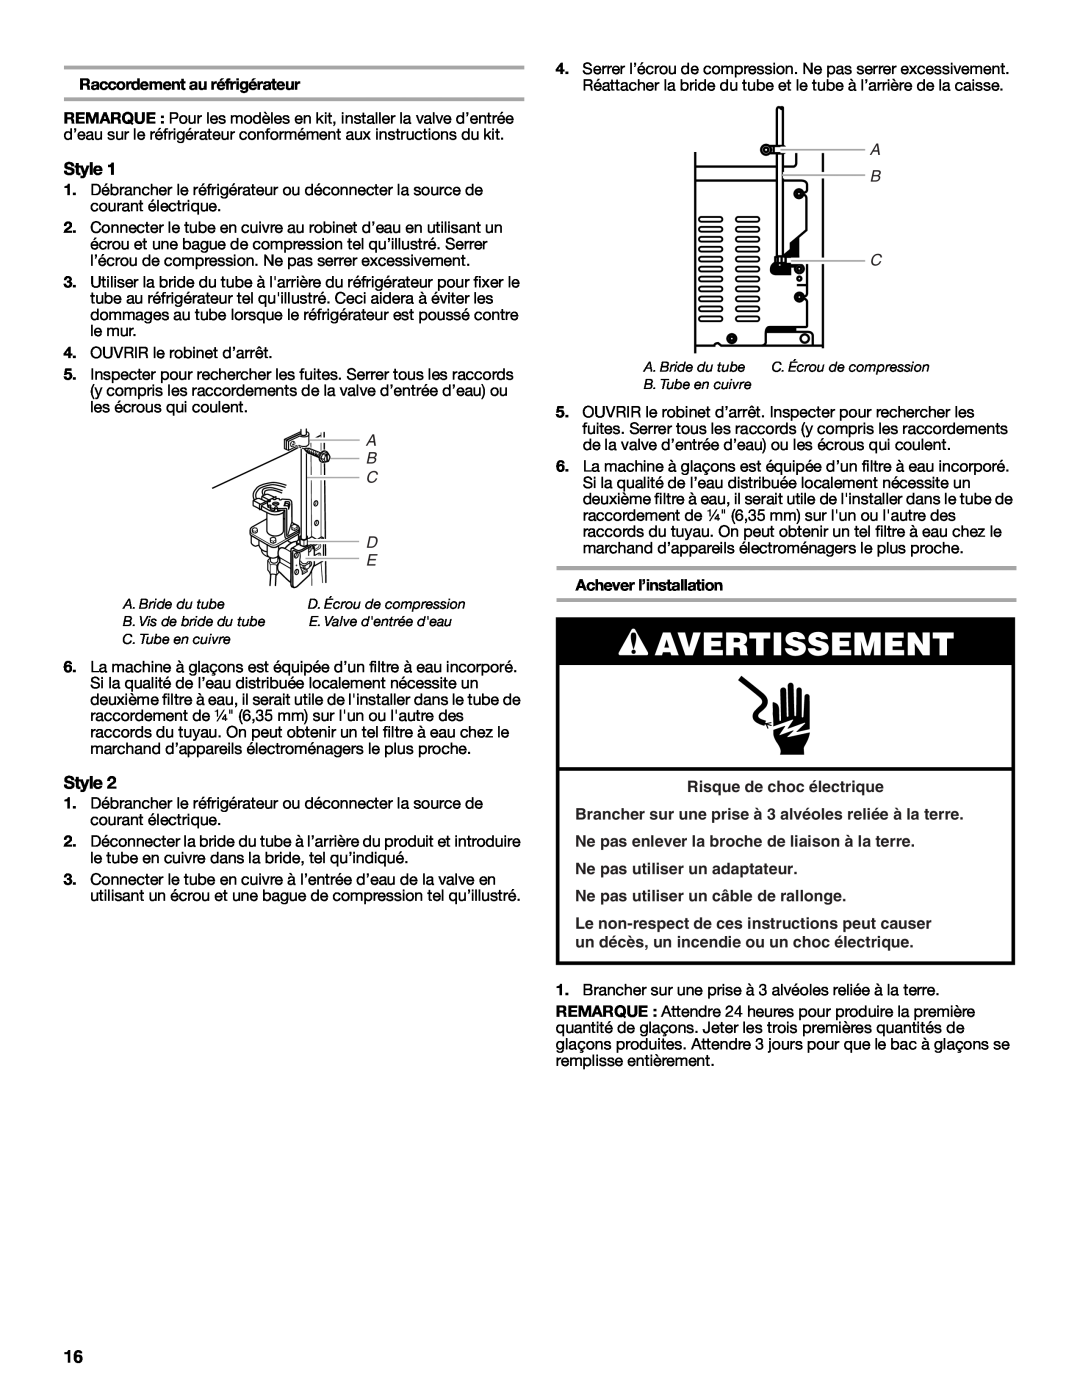 Whirlpool W10217604A installation instructions Avertissement, Raccordement au réfrigérateur, A B C, Achever l’installation 